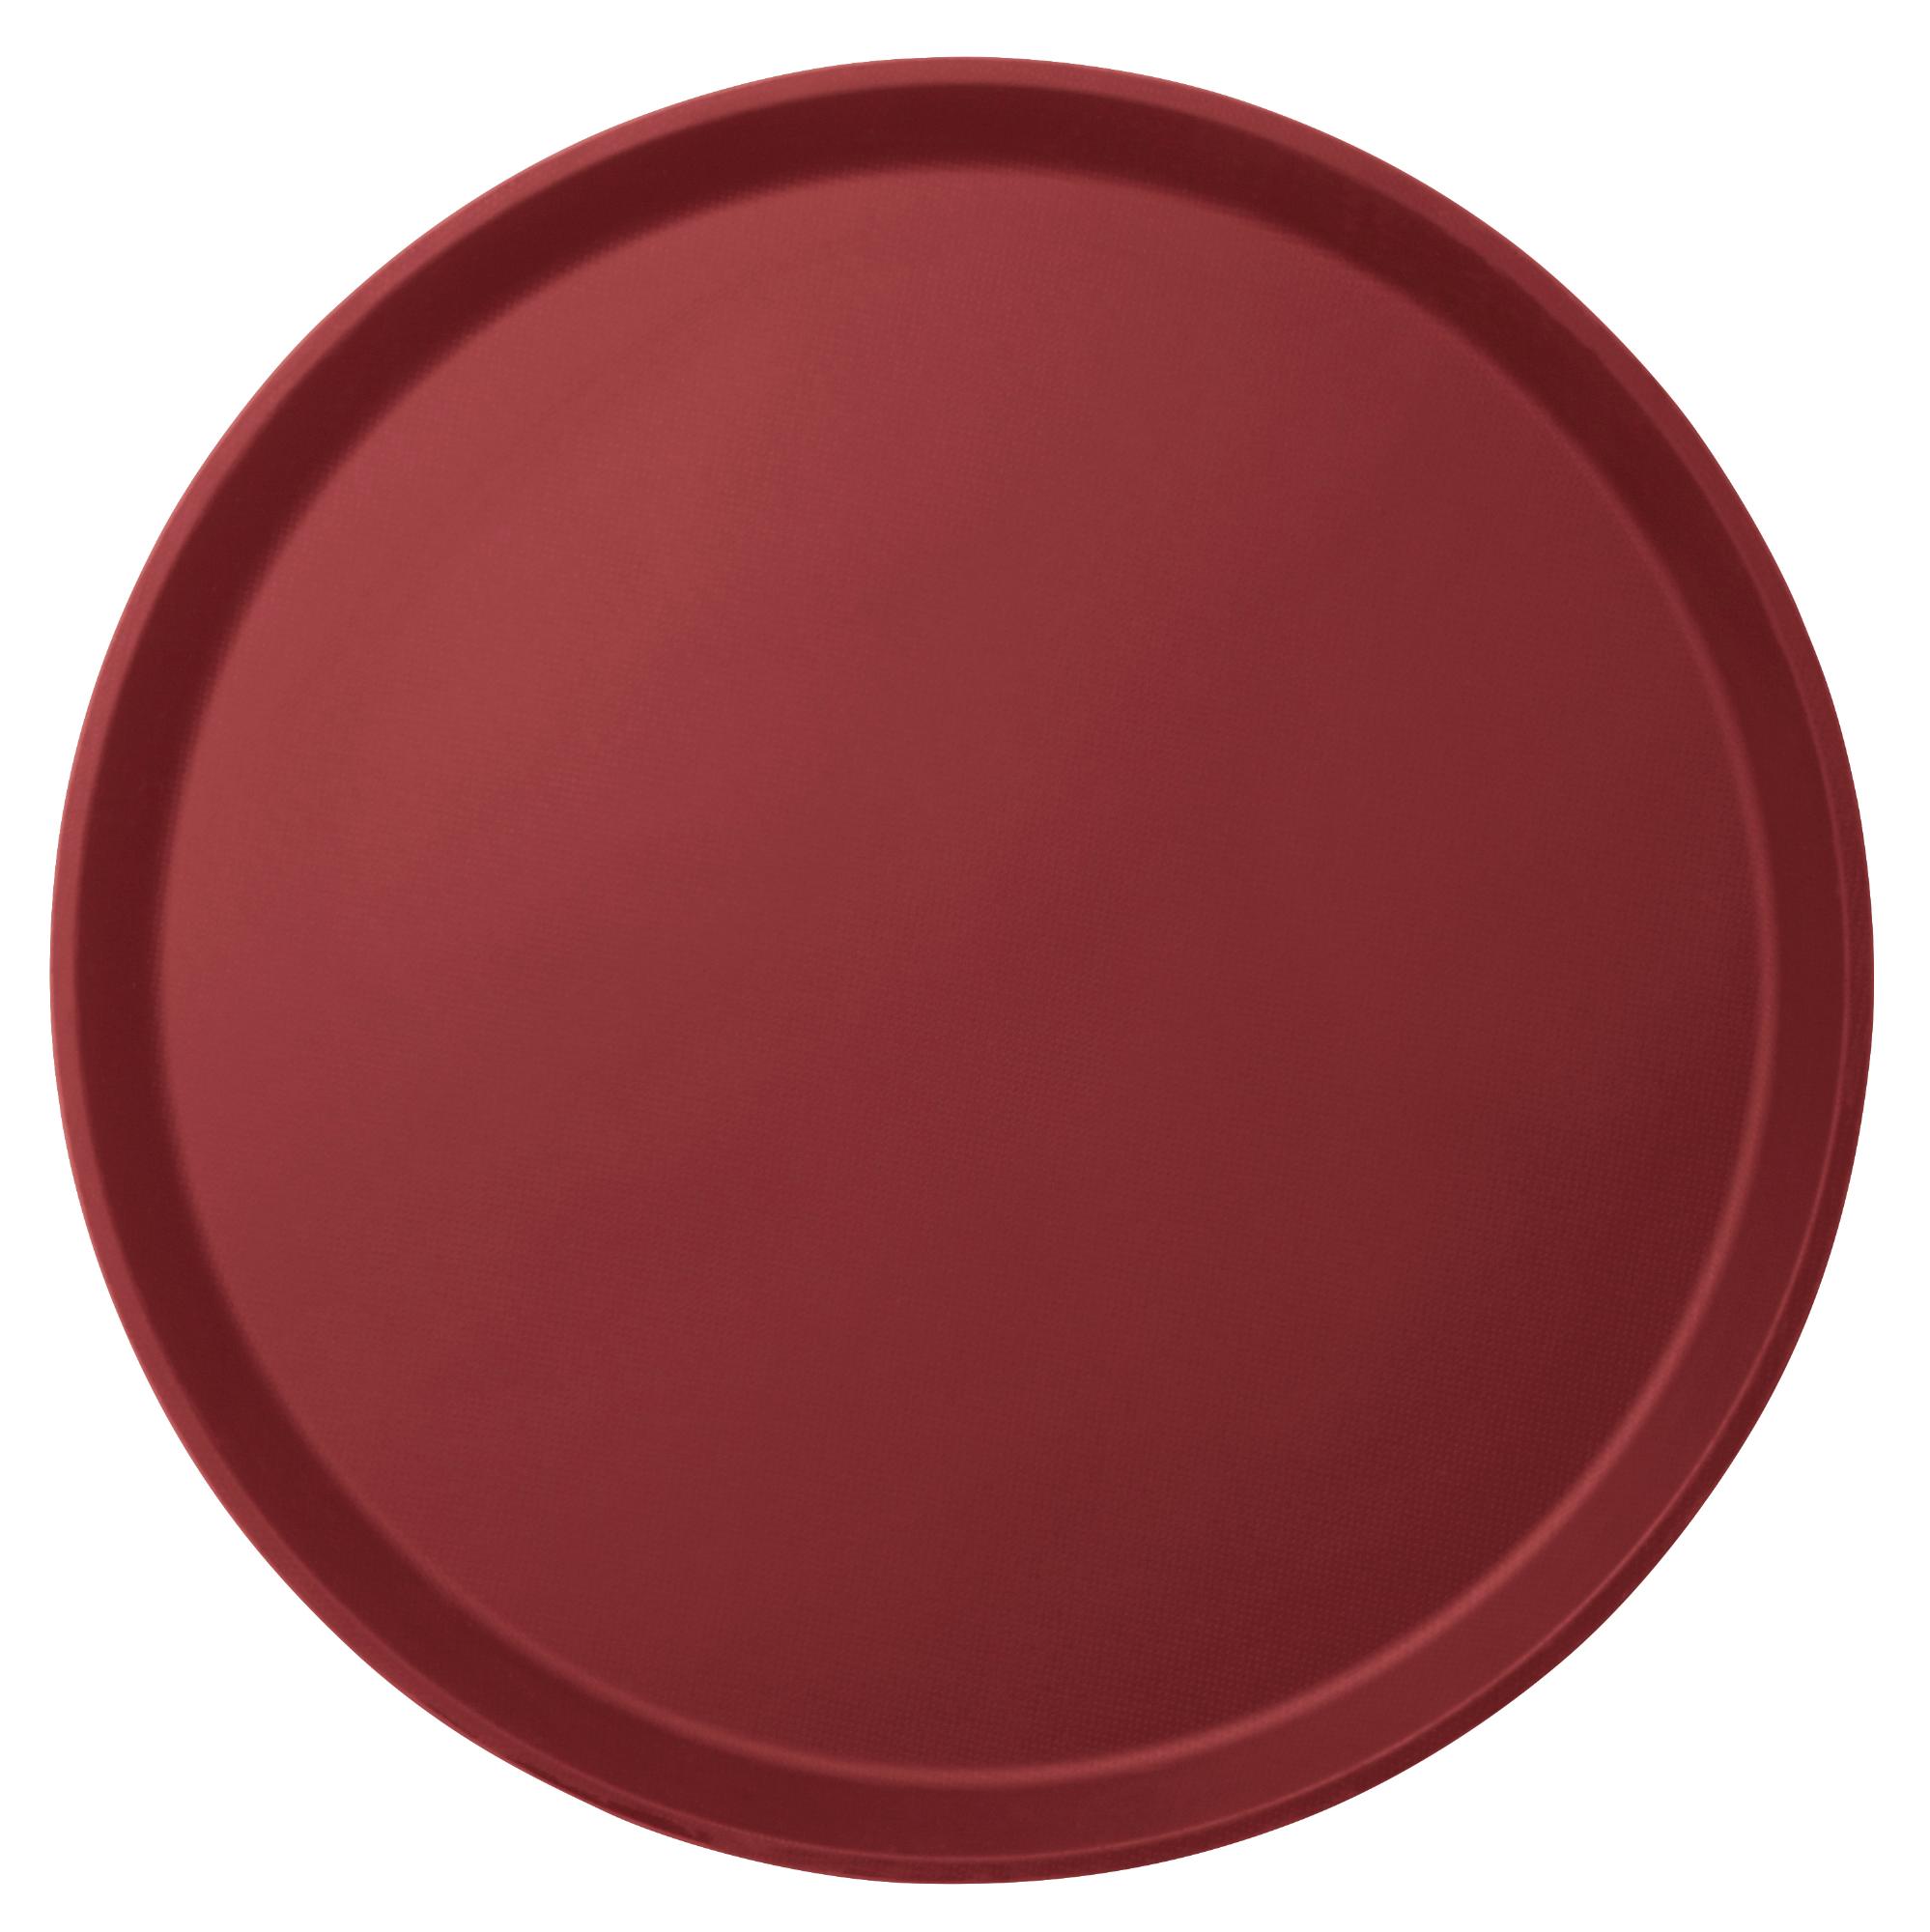 Camtread serving tray, round, non-slip surface, burgundy, 355mm